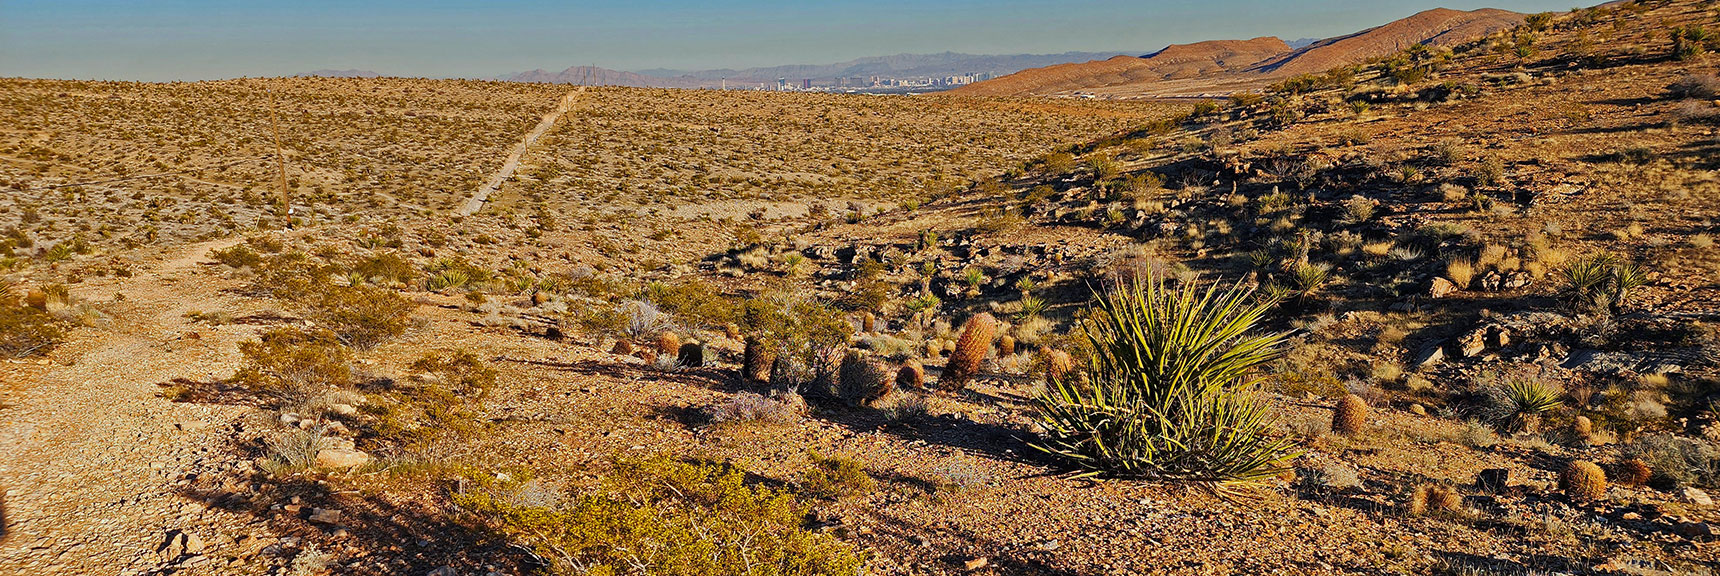 Cactus Garden on Peak 3844 Trail. Powerline Maintenance Road, Vegas Valley Below. | Brownstone Trail | Calico Basin | Brownstone Basin | La Madre Mountains Wilderness, Nevada